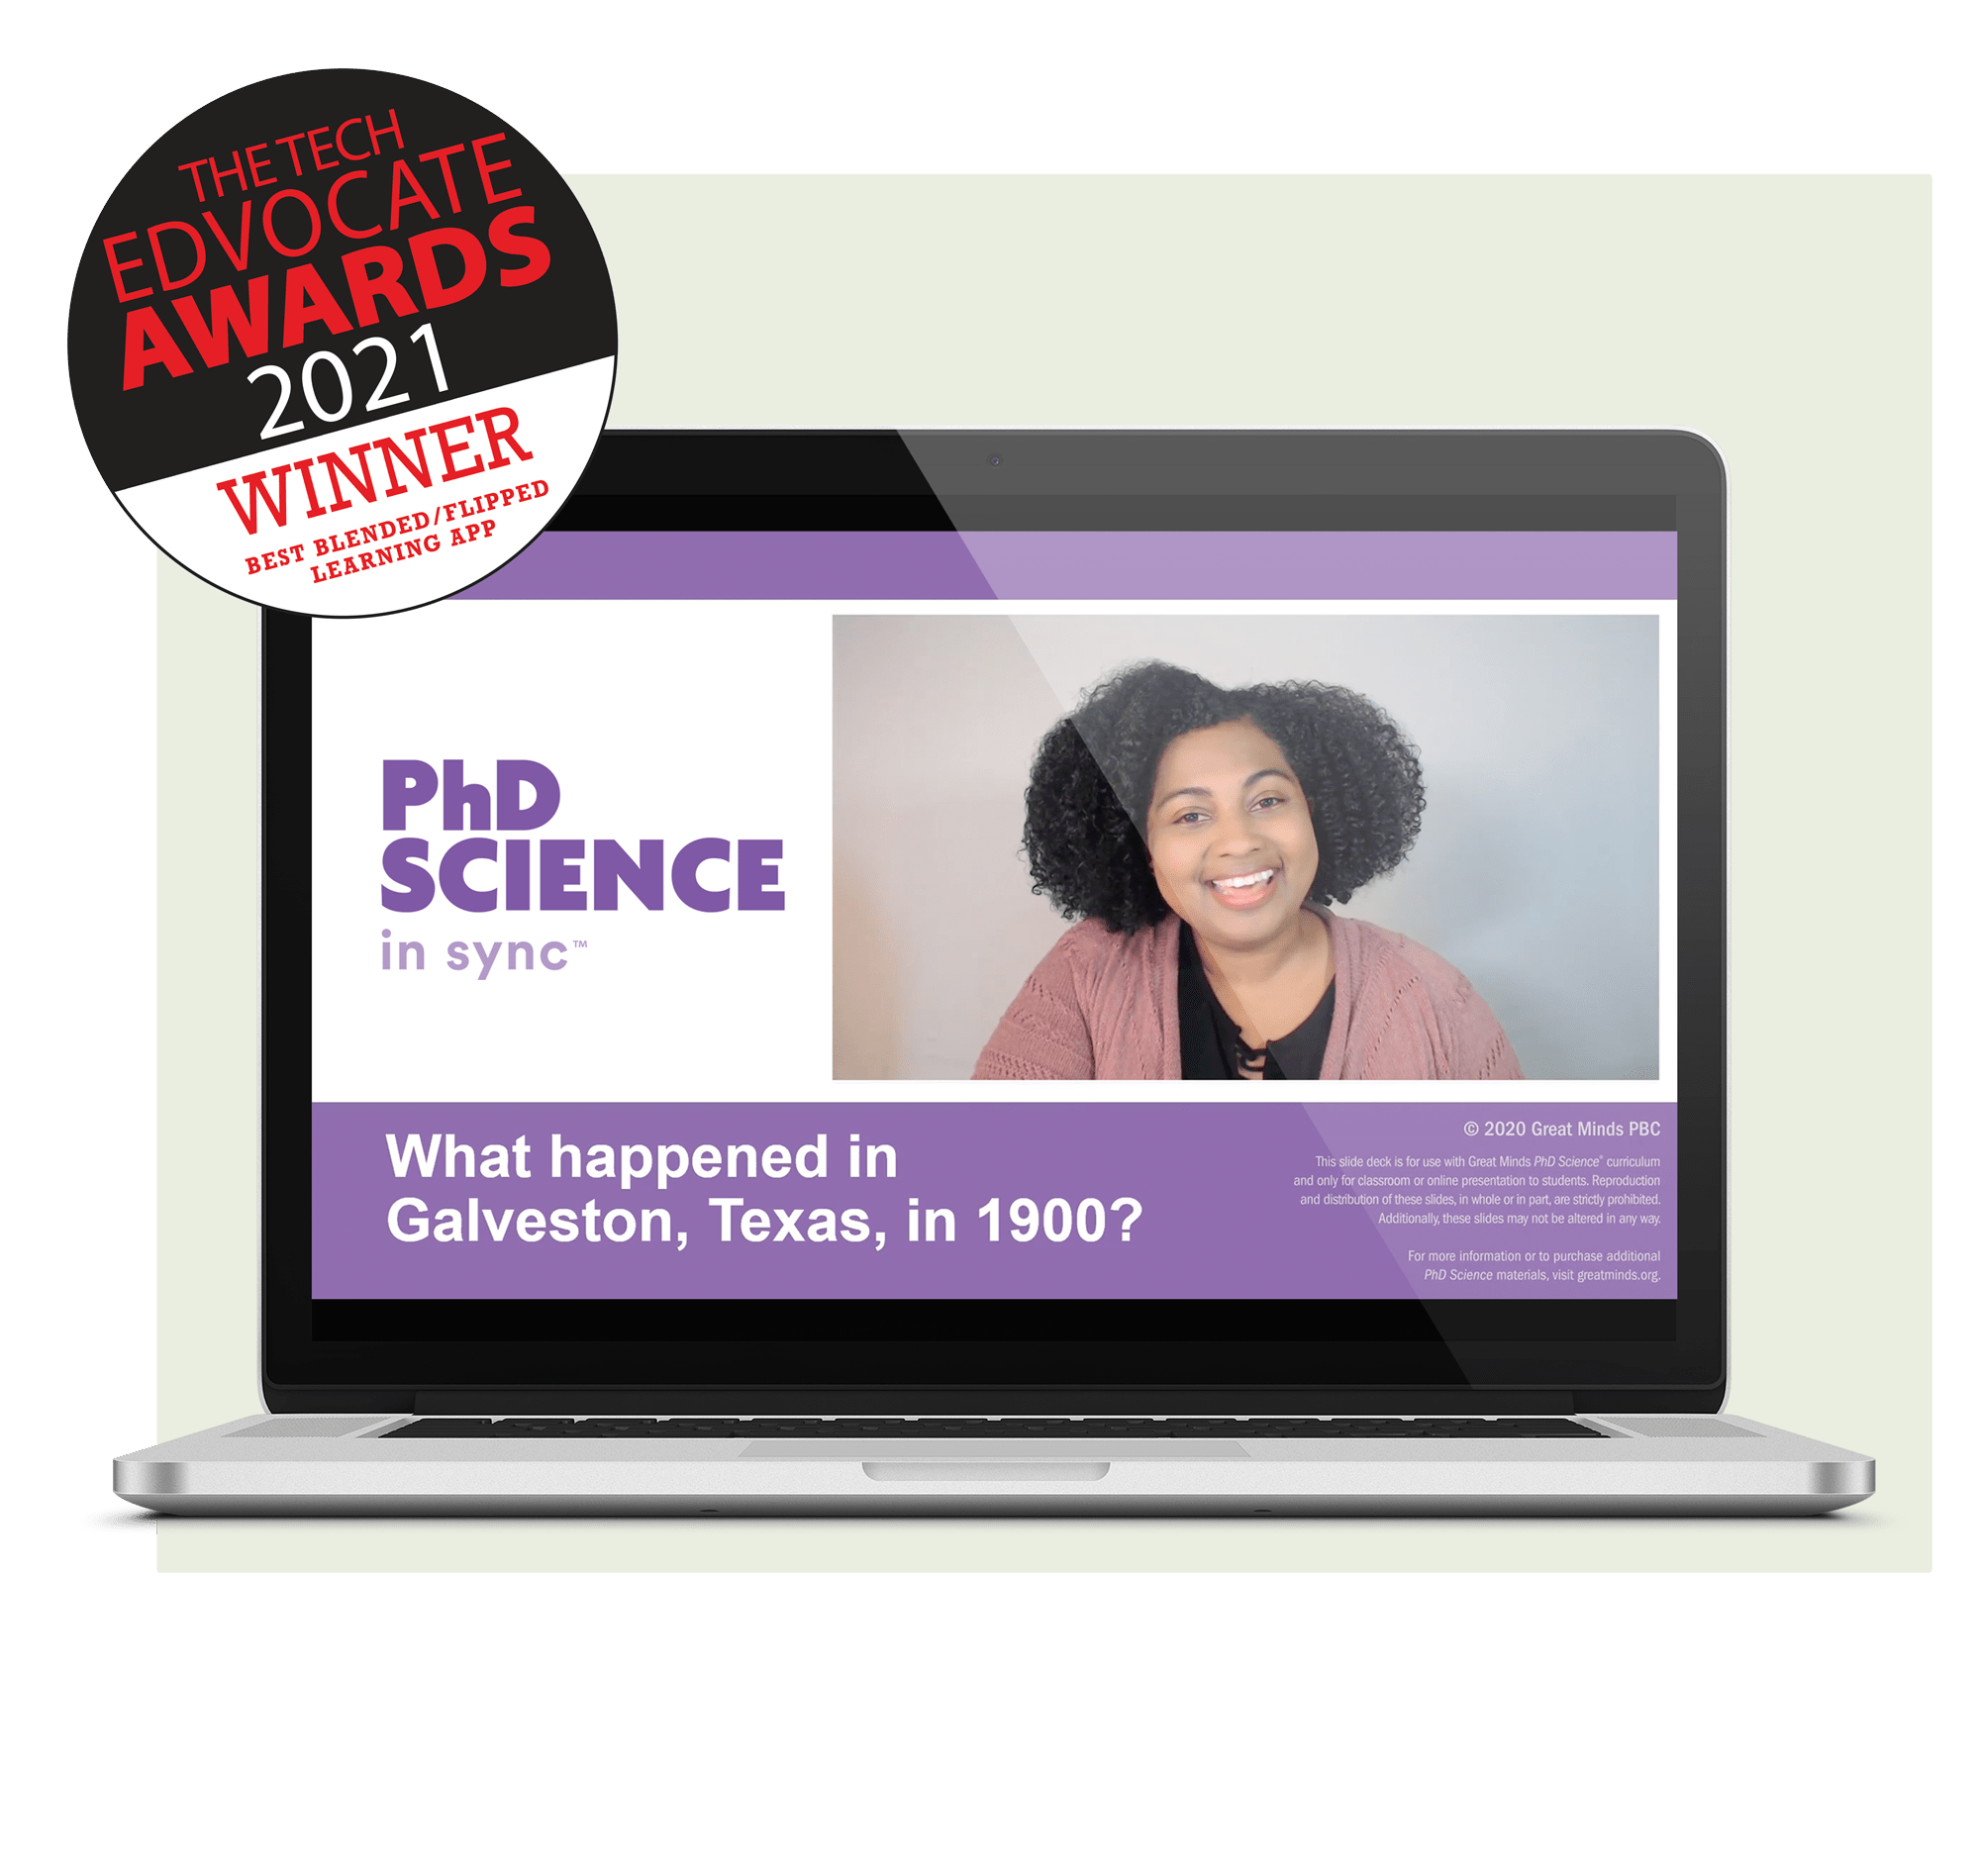 PhD-Science-in-Sync-Award-Winner